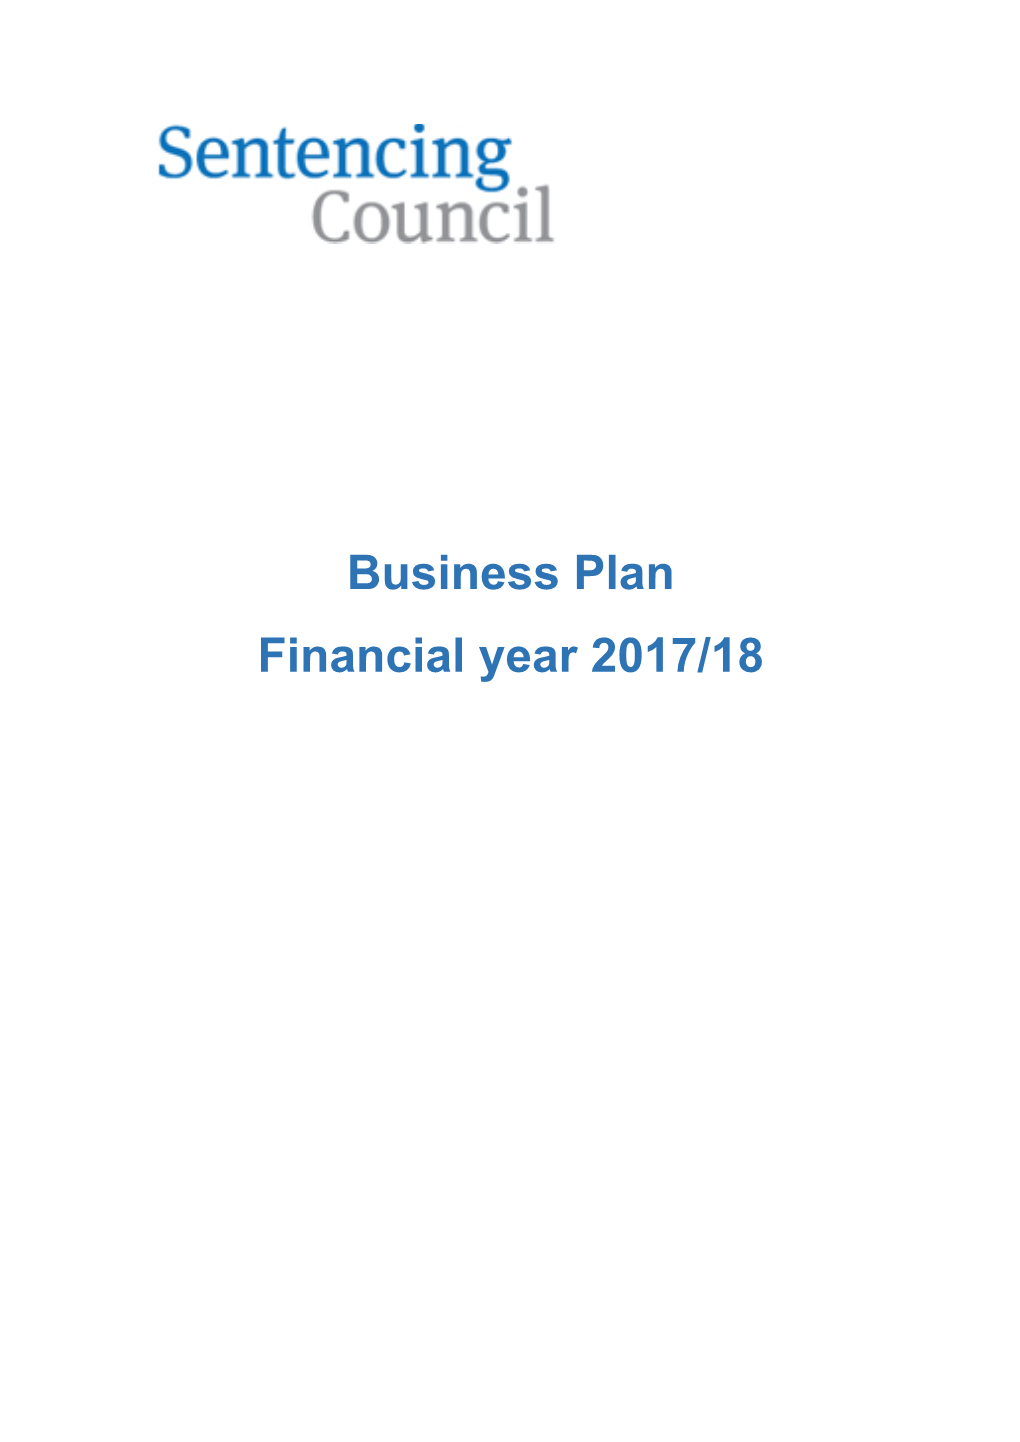 Sentencing Council Business Plan 2017-18